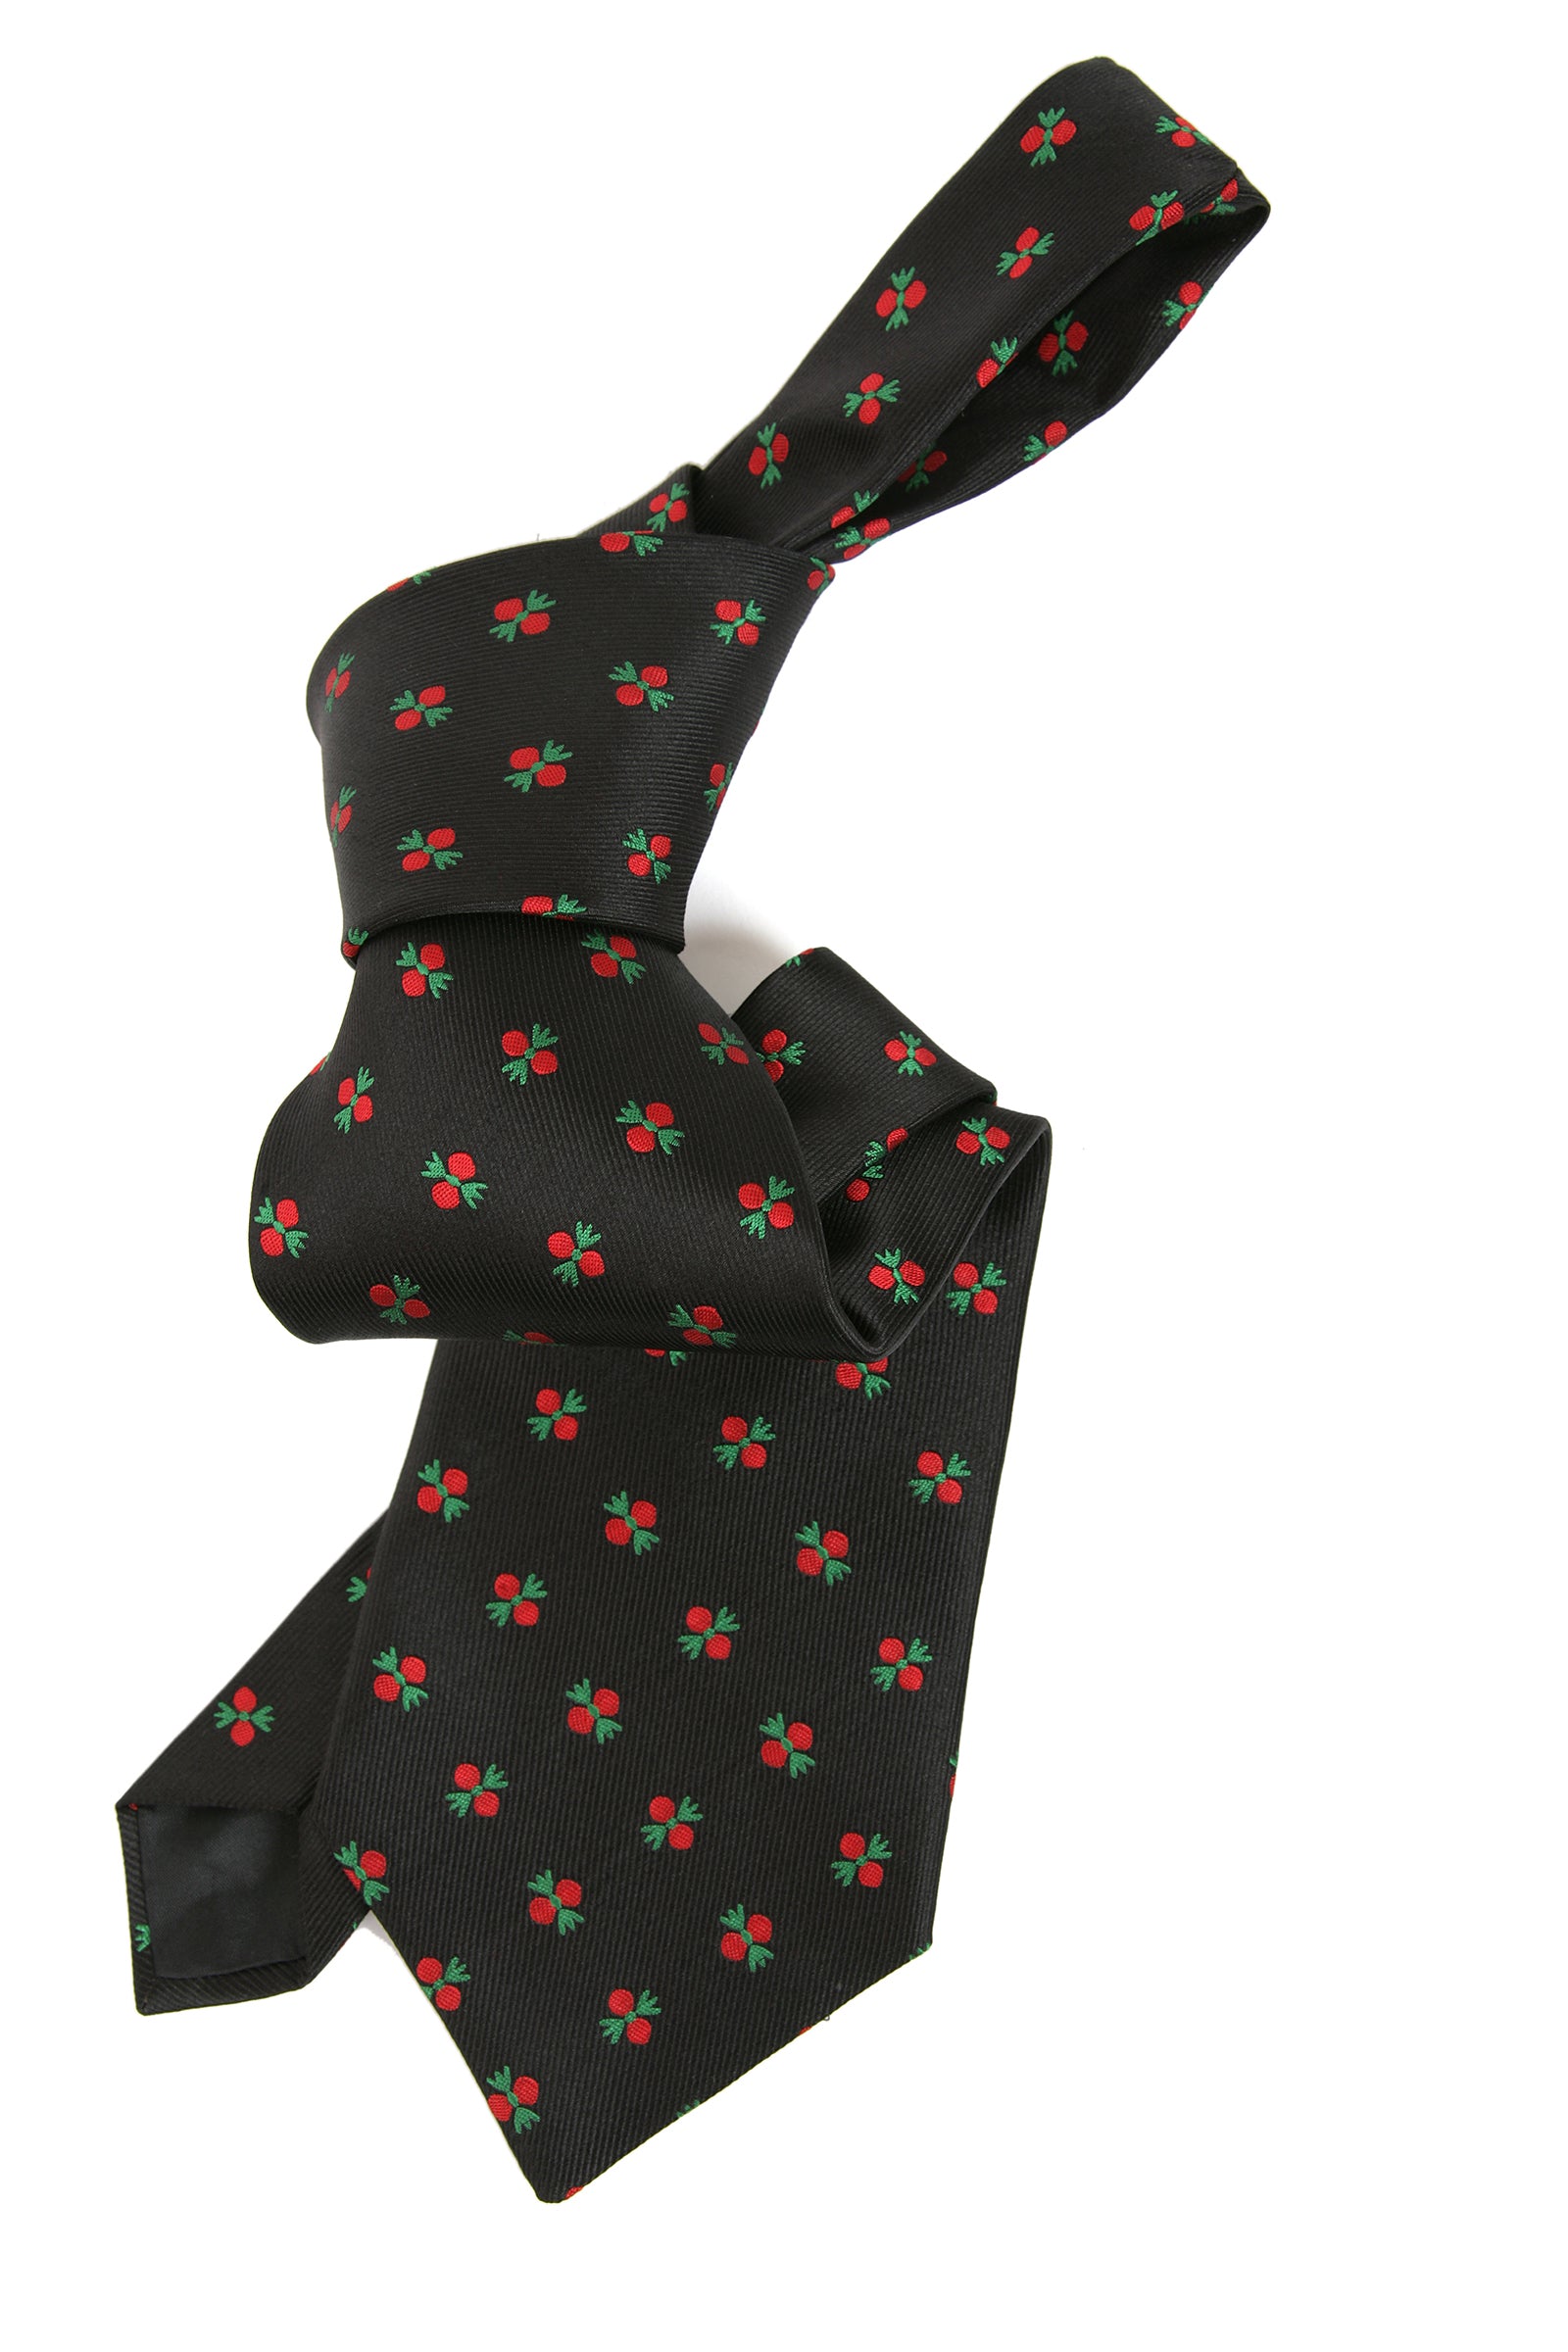 Pleamle Krawatte schwarz